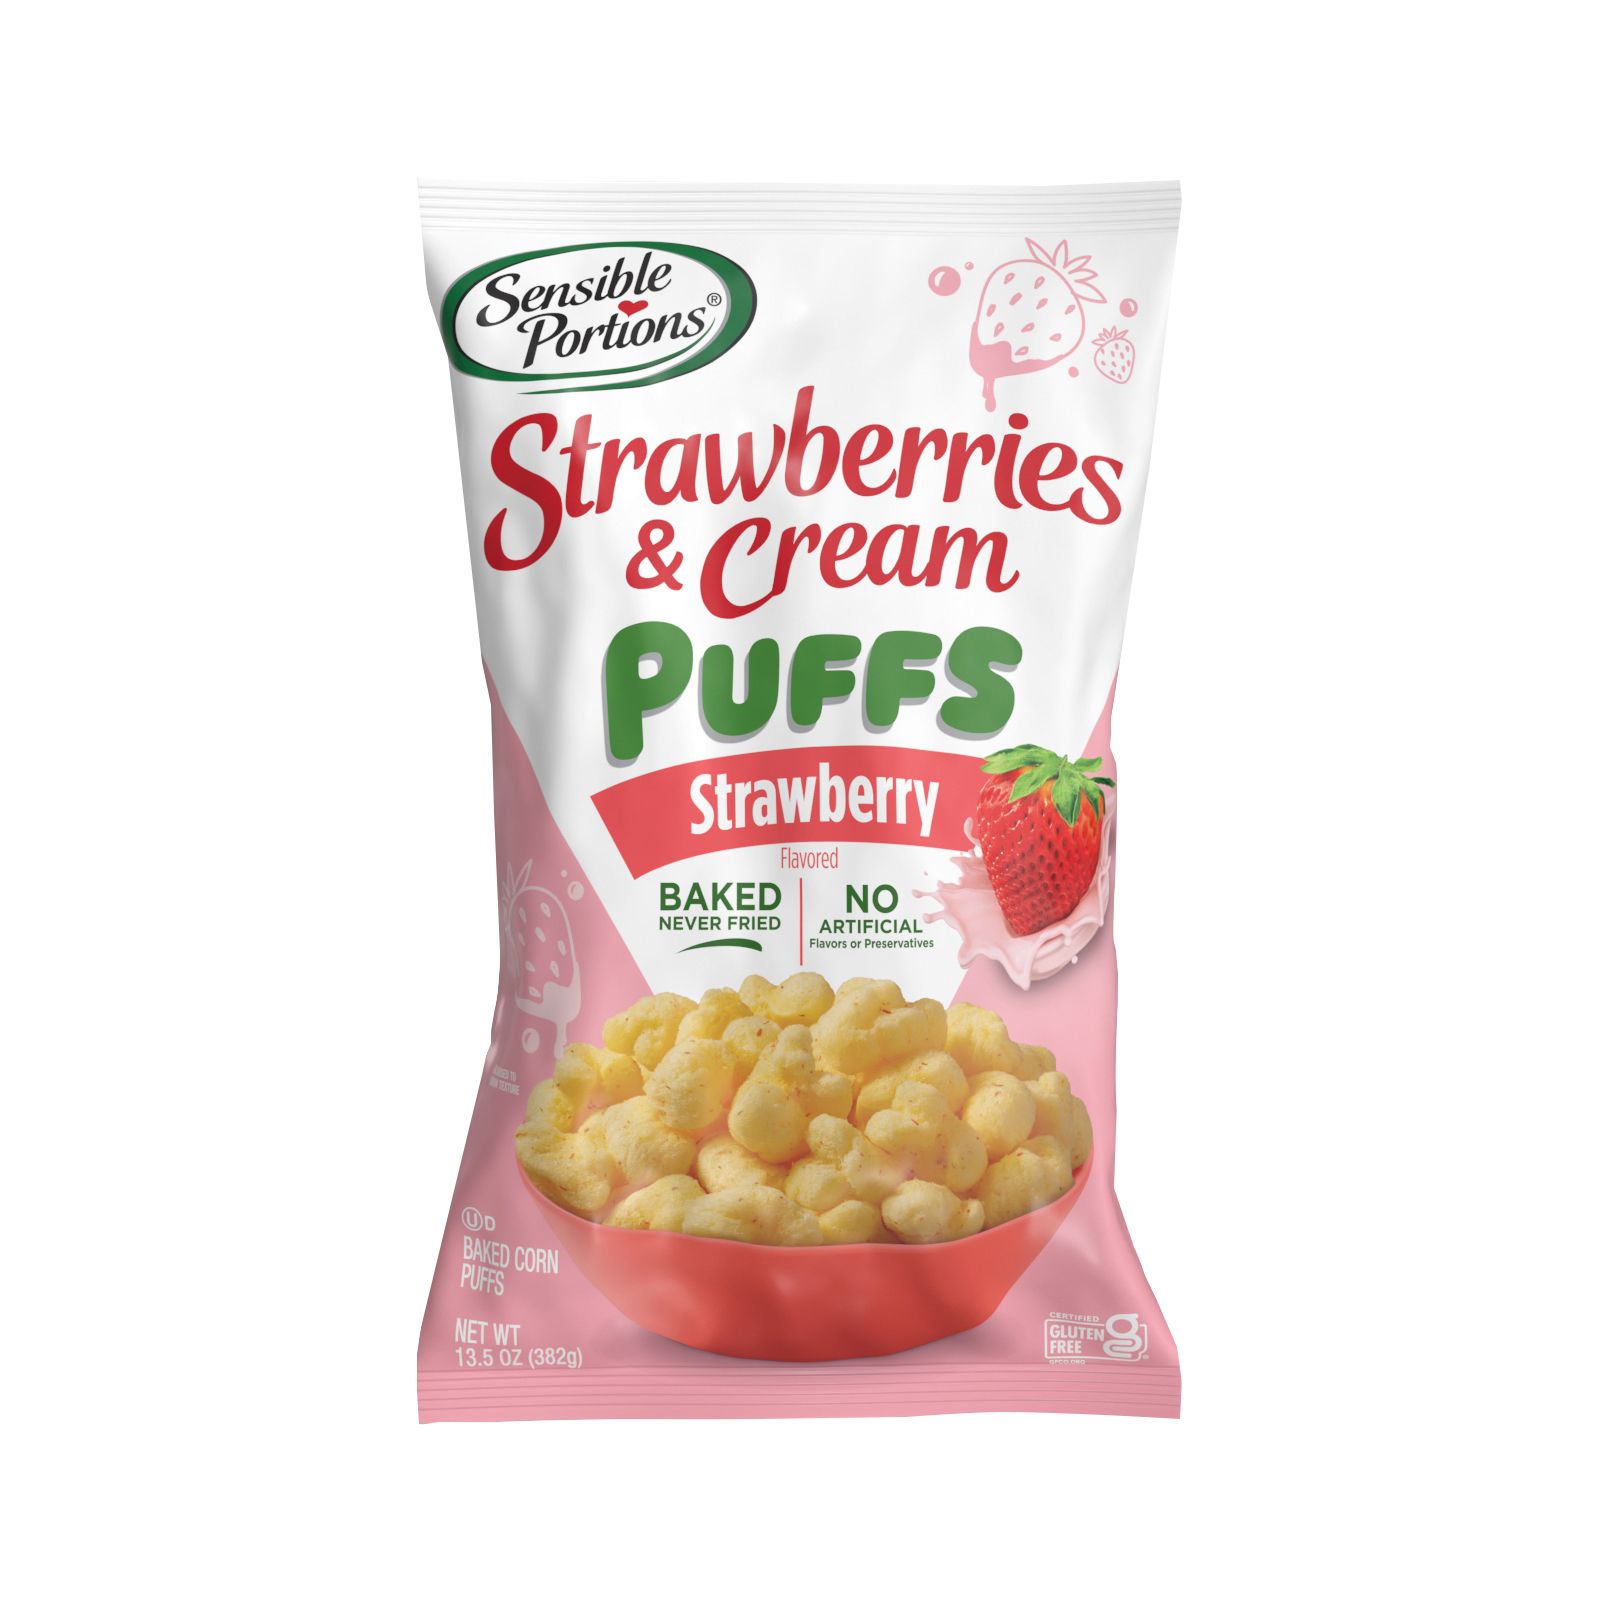 Sensible Portions Strawberries & Cream Puffs, 13.5 oz.